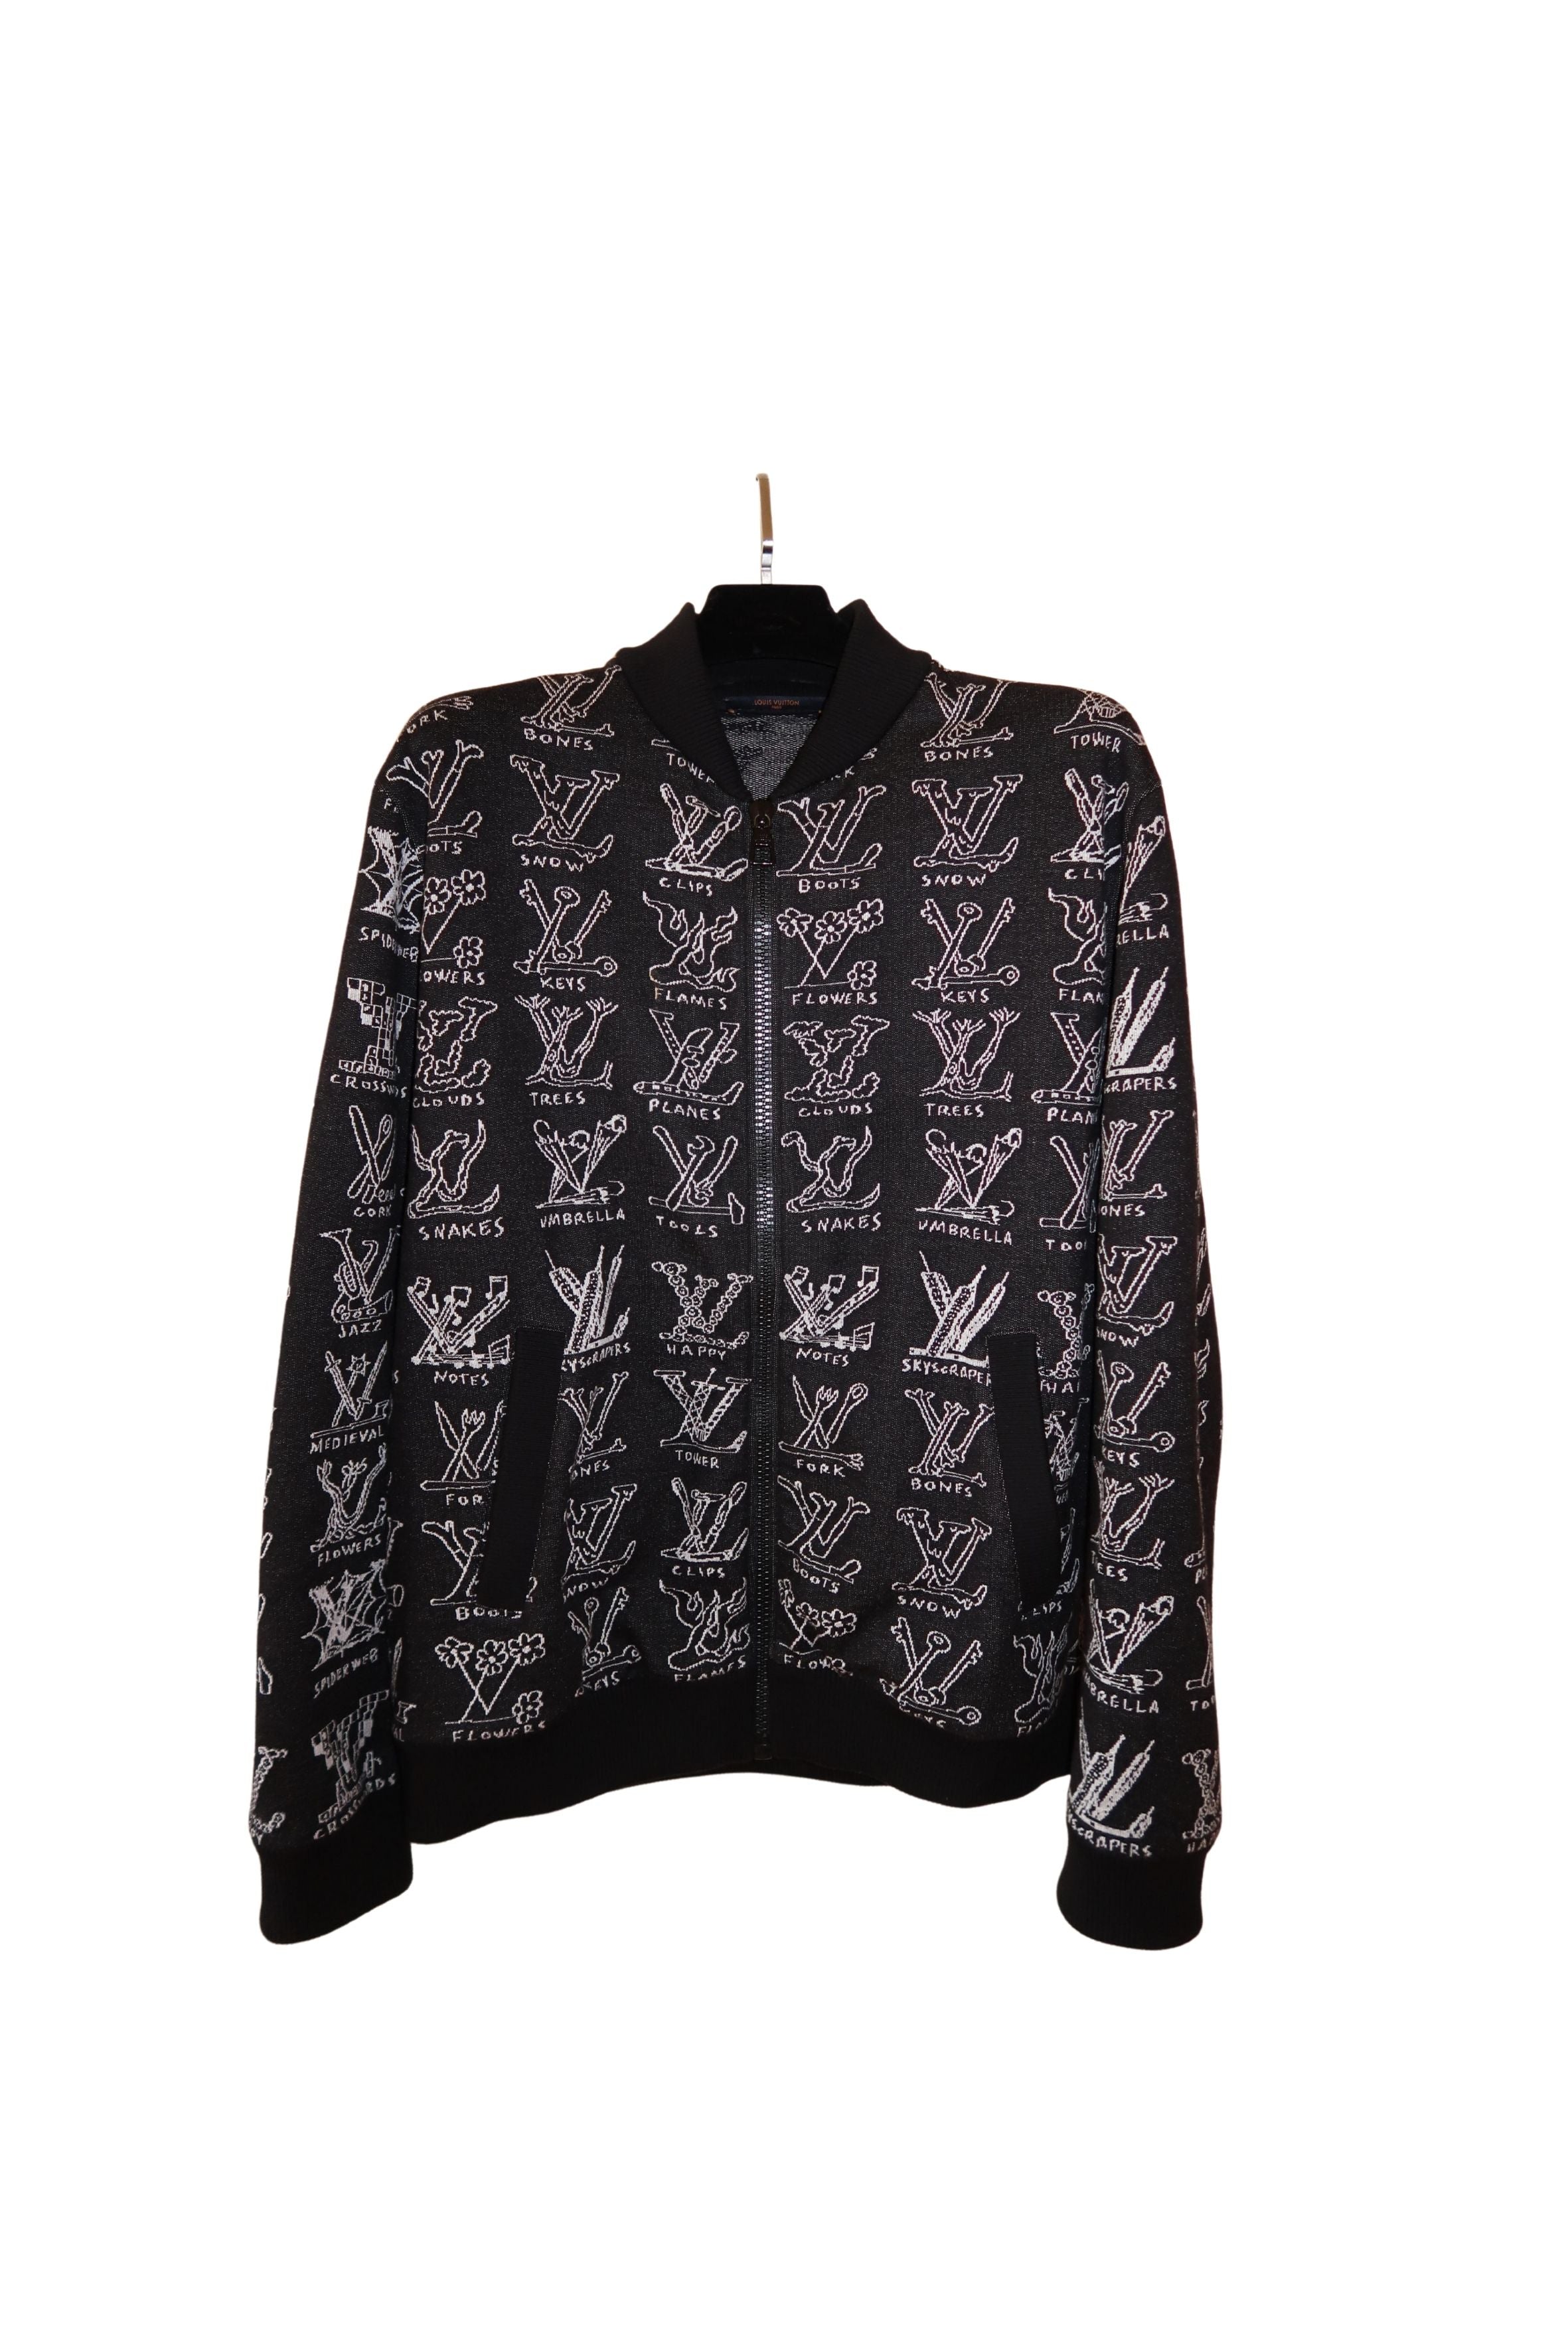 Louis Vuitton Cartoons Jacquard Zipped through Blouson Jacket in Size L